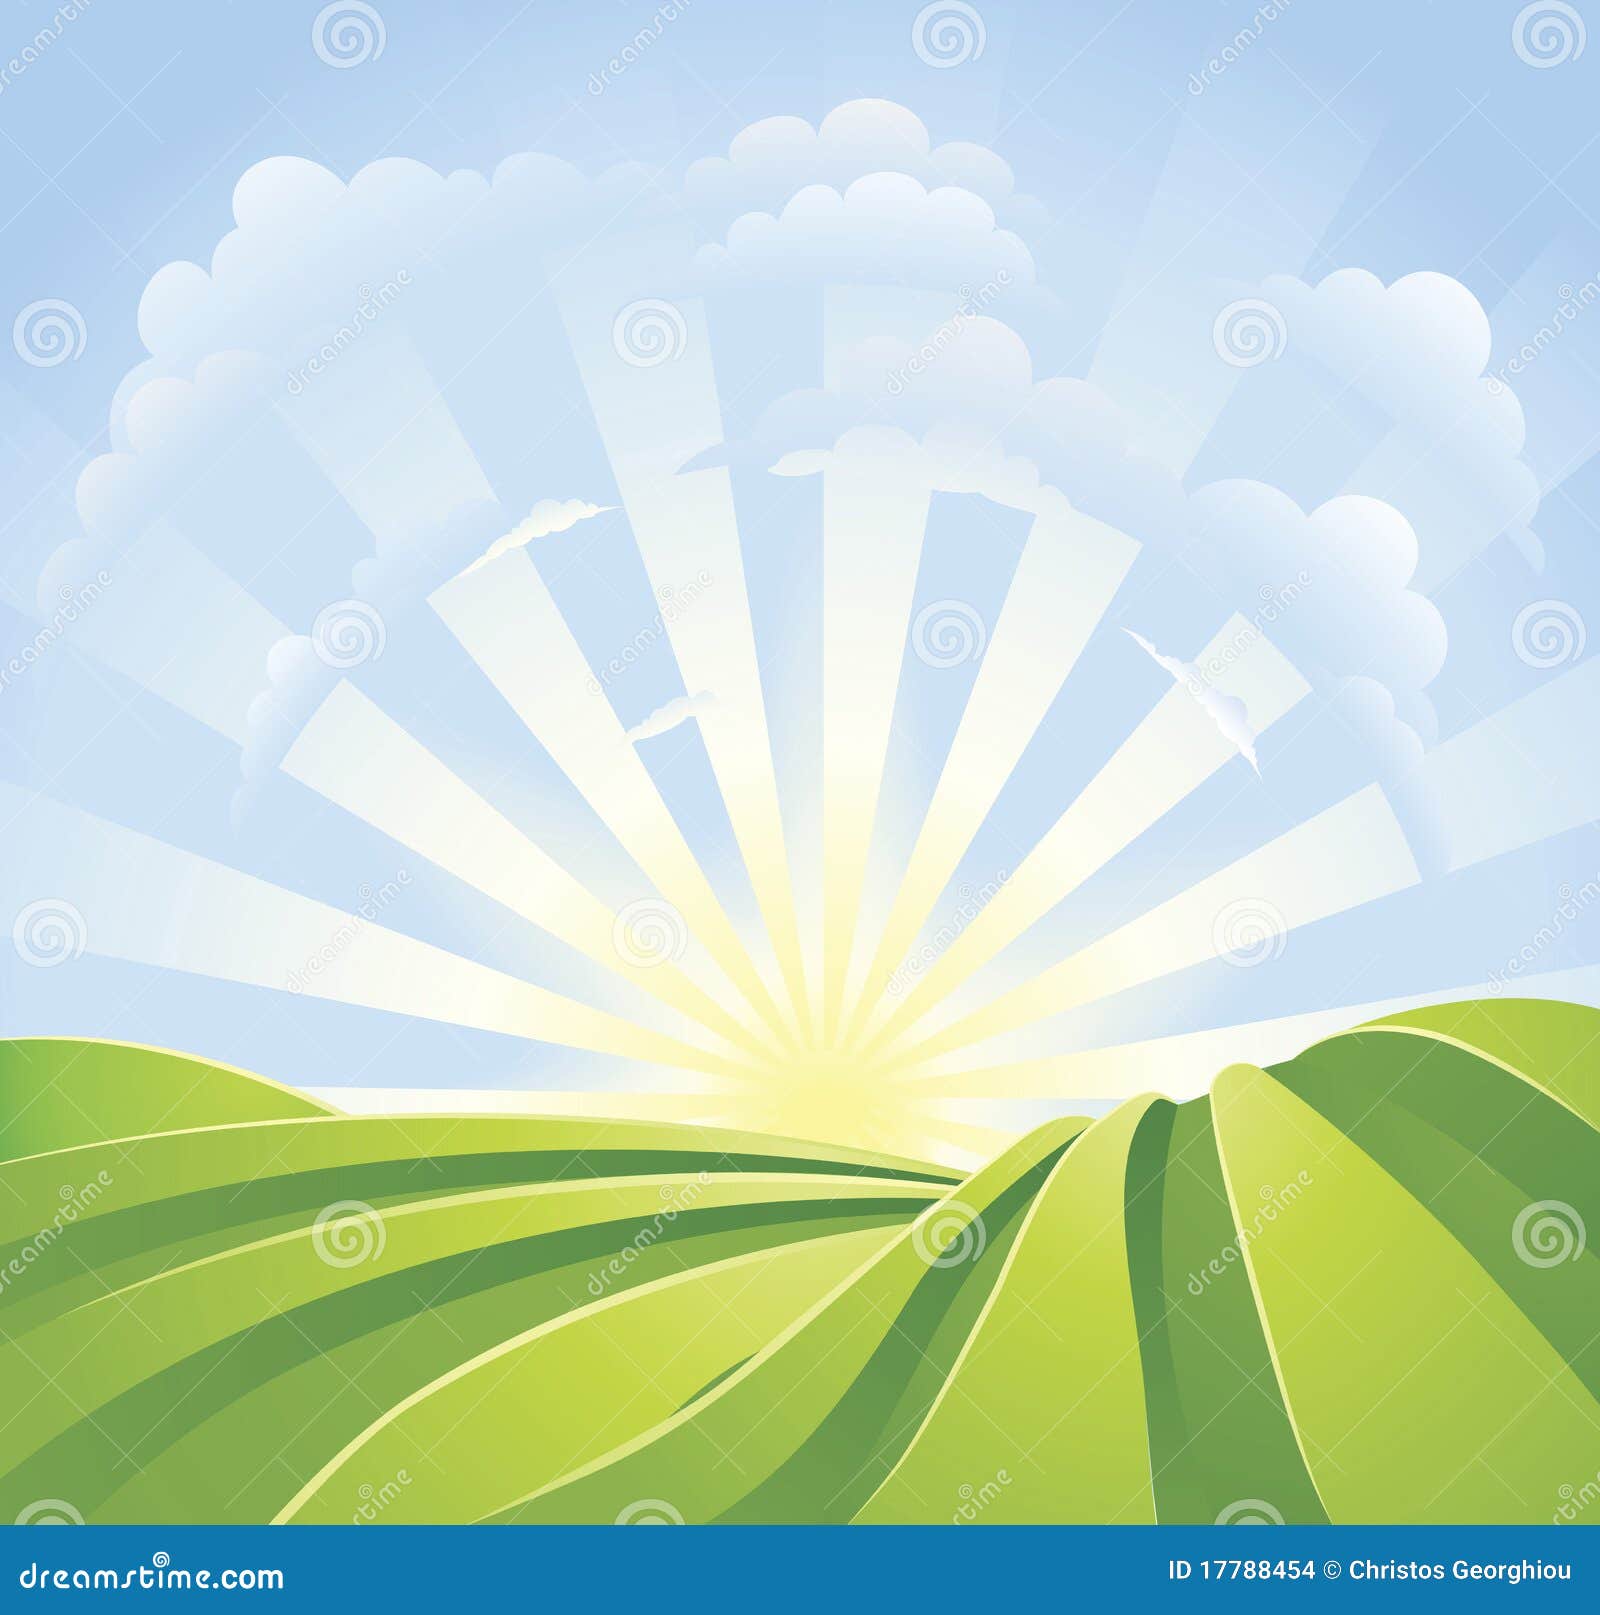 idyllic green fields with sunshine rays